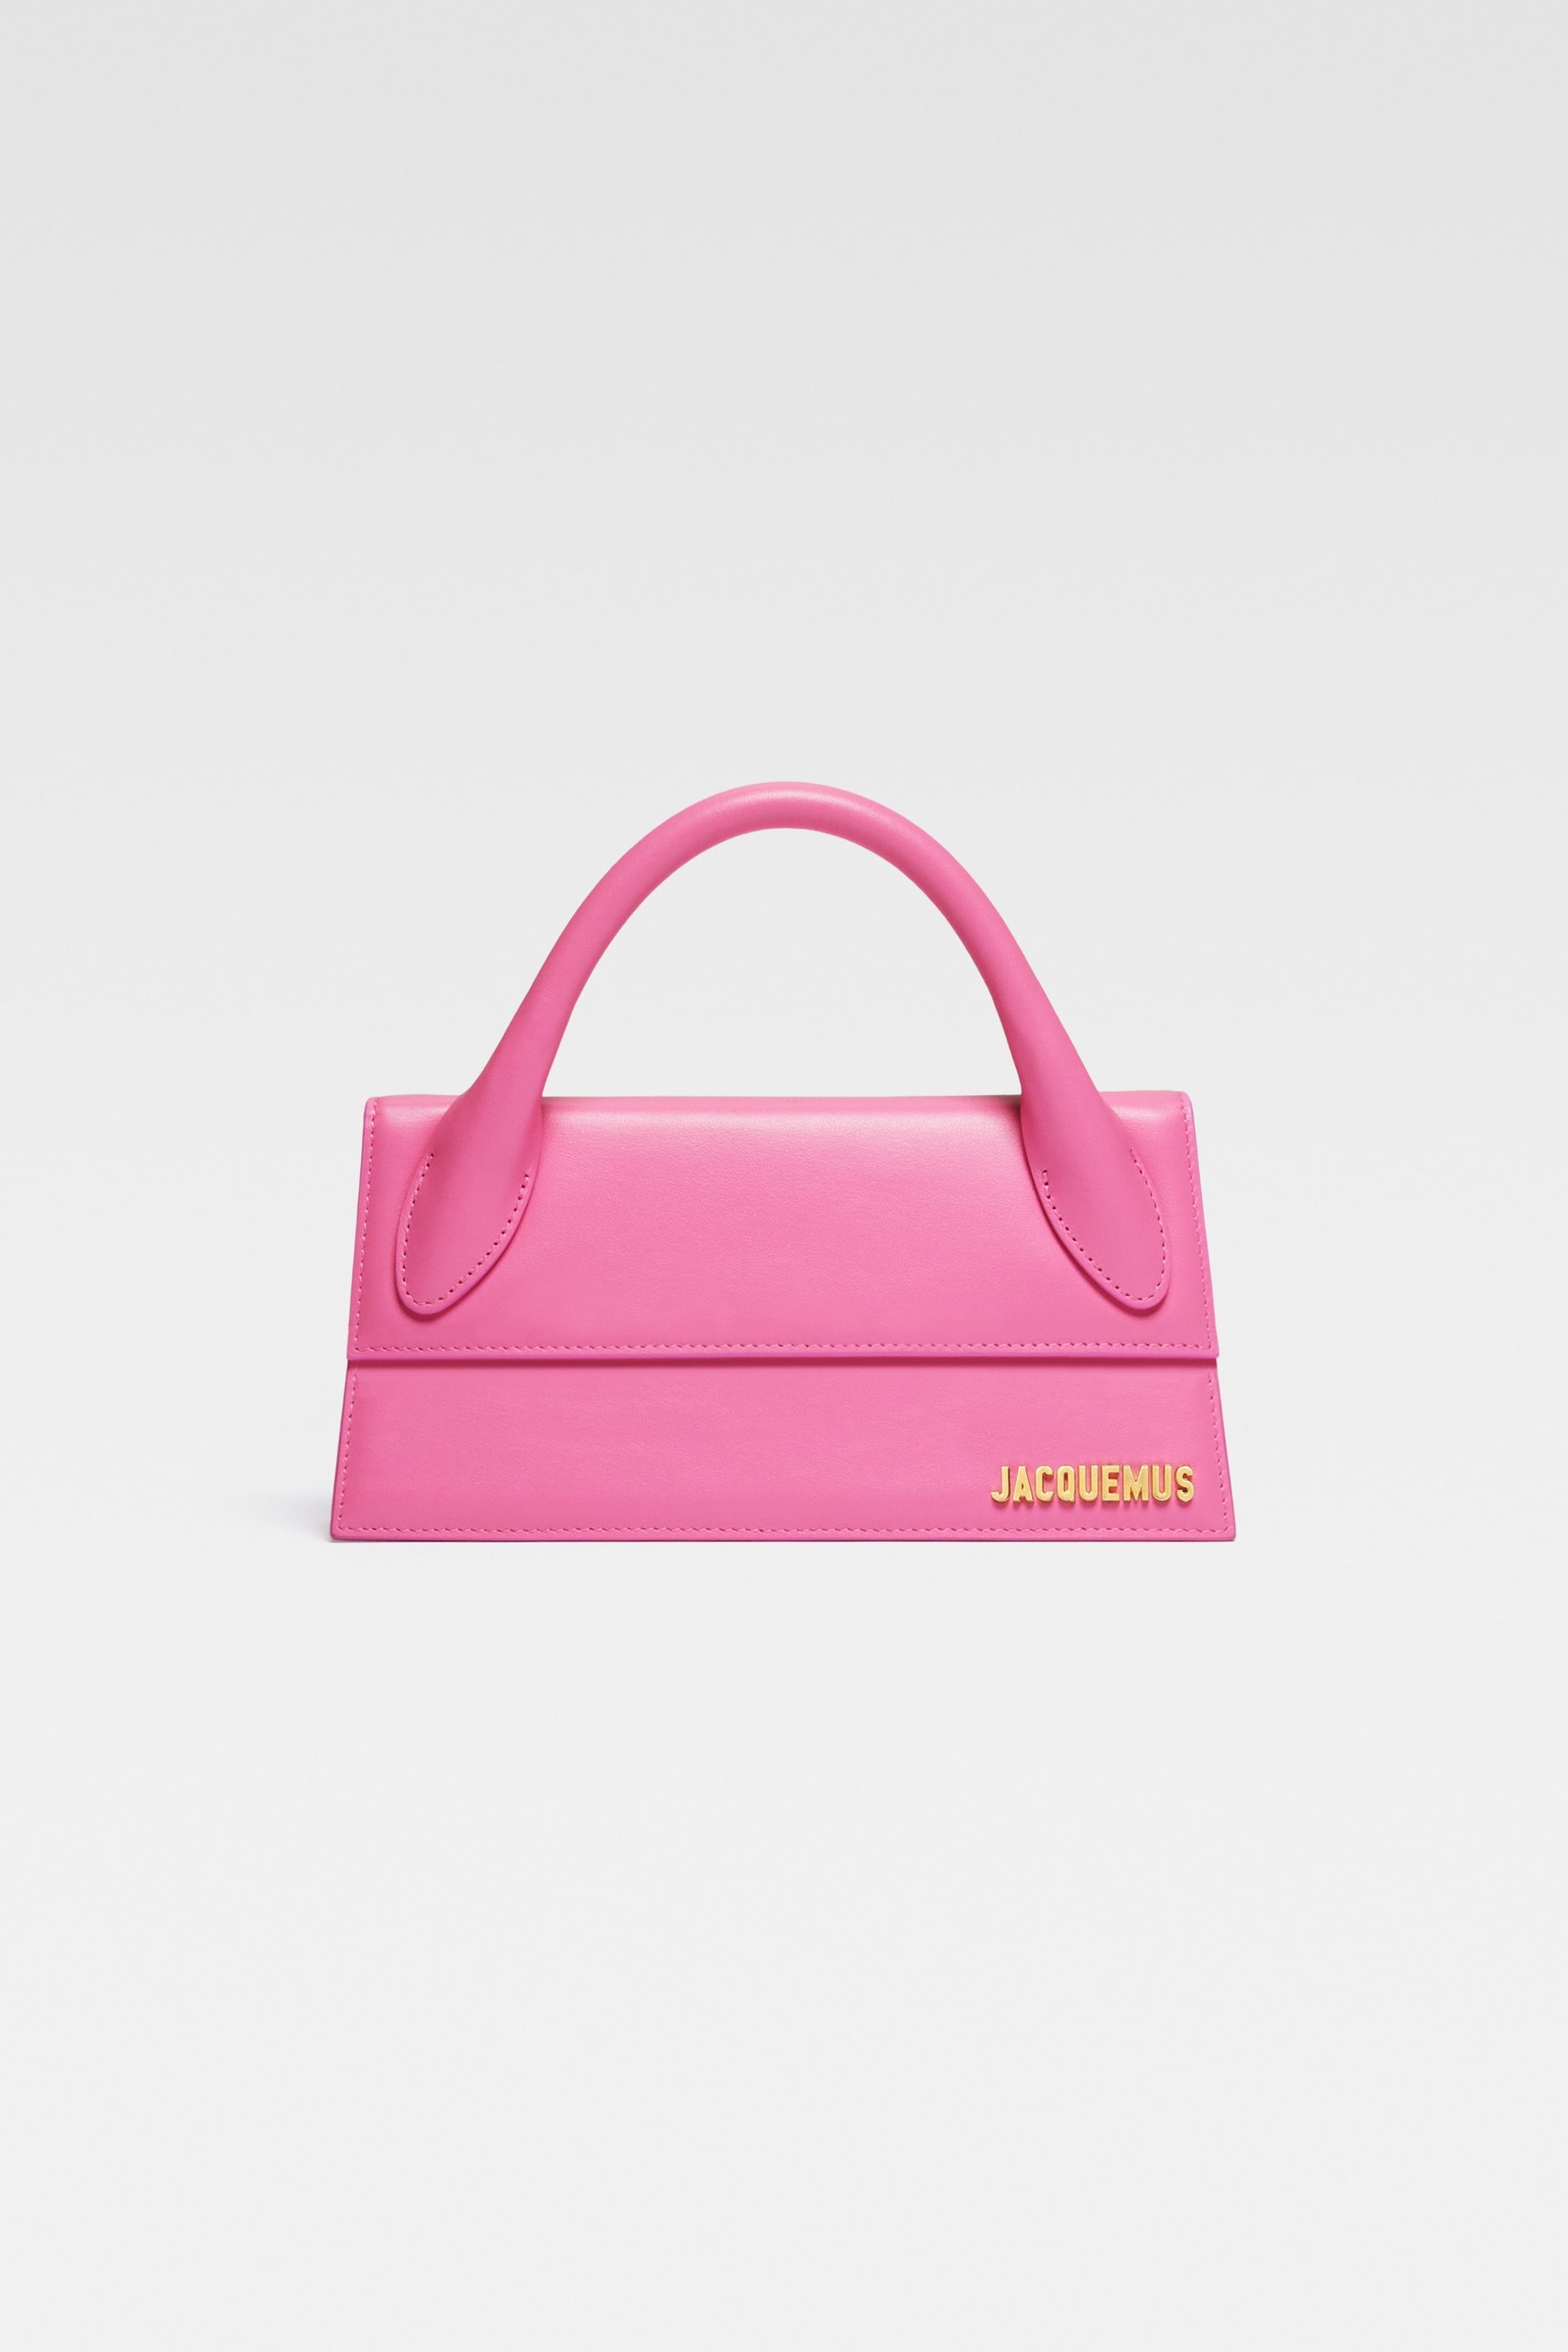 Jacquemus - Le Chiquito Long Bag - Pink